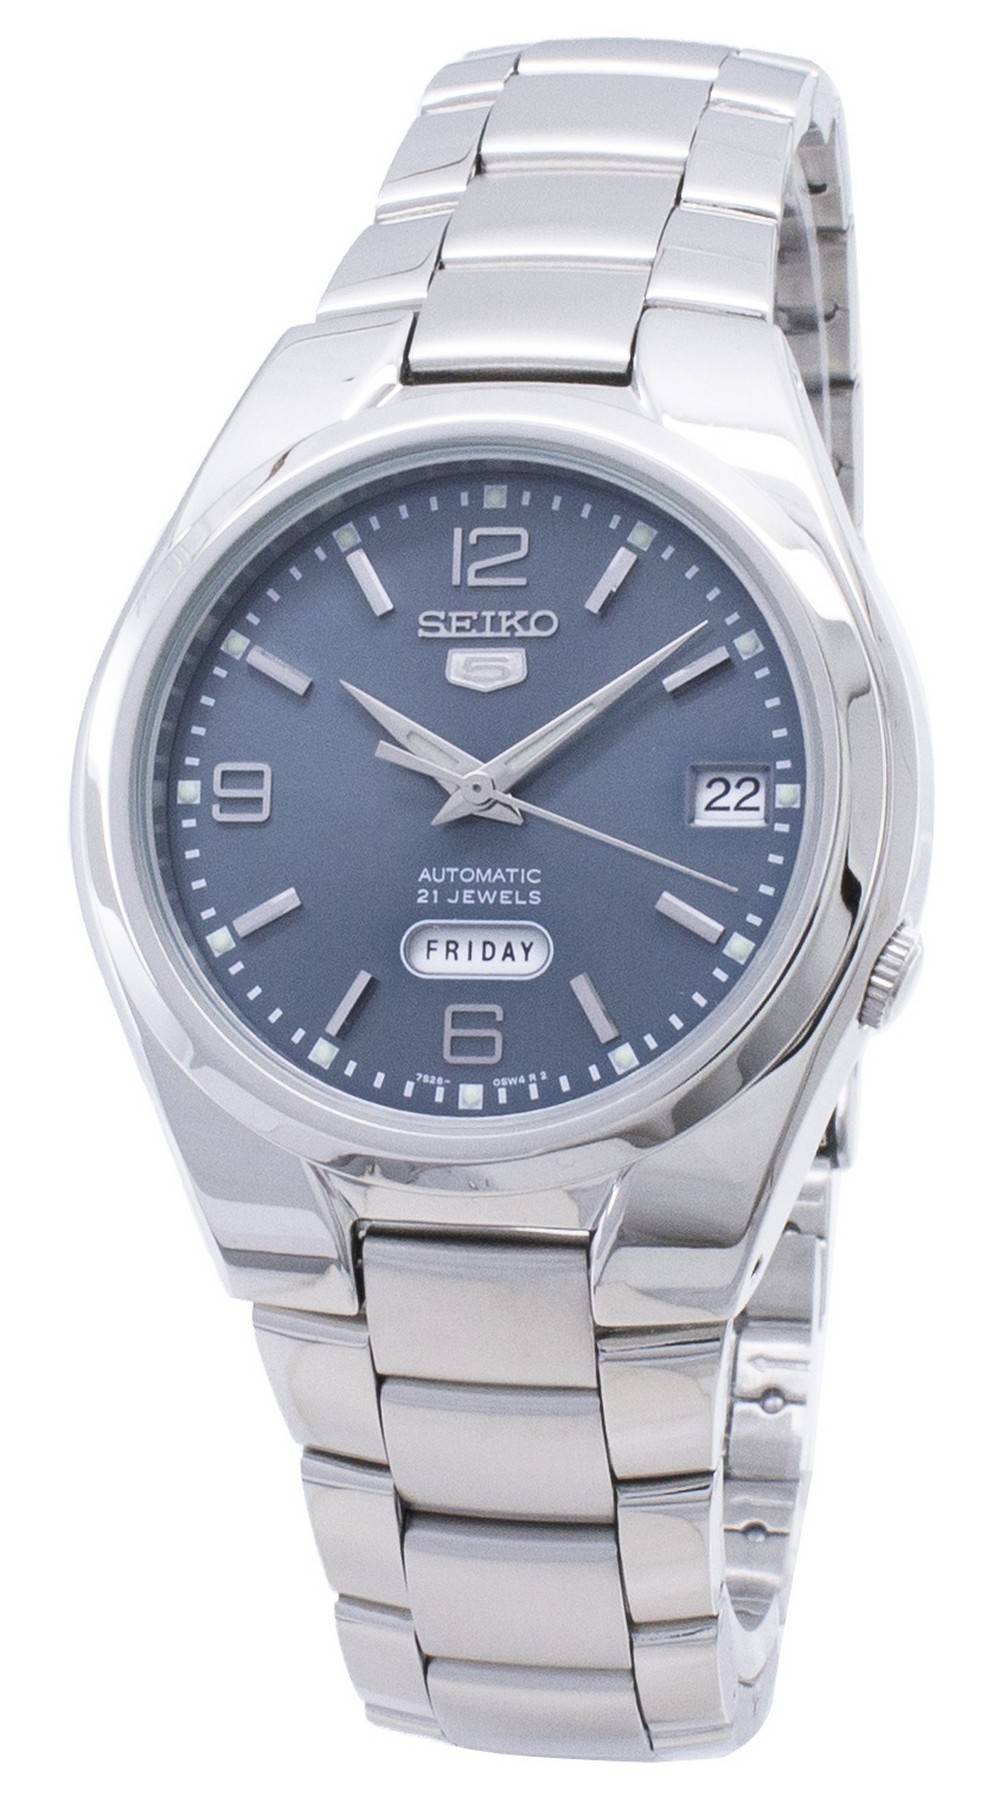 Đồng hồ đeo tay nam Seiko 5 Automatic 21 Jewels SNK621 SNK621K1 SNK621K vi